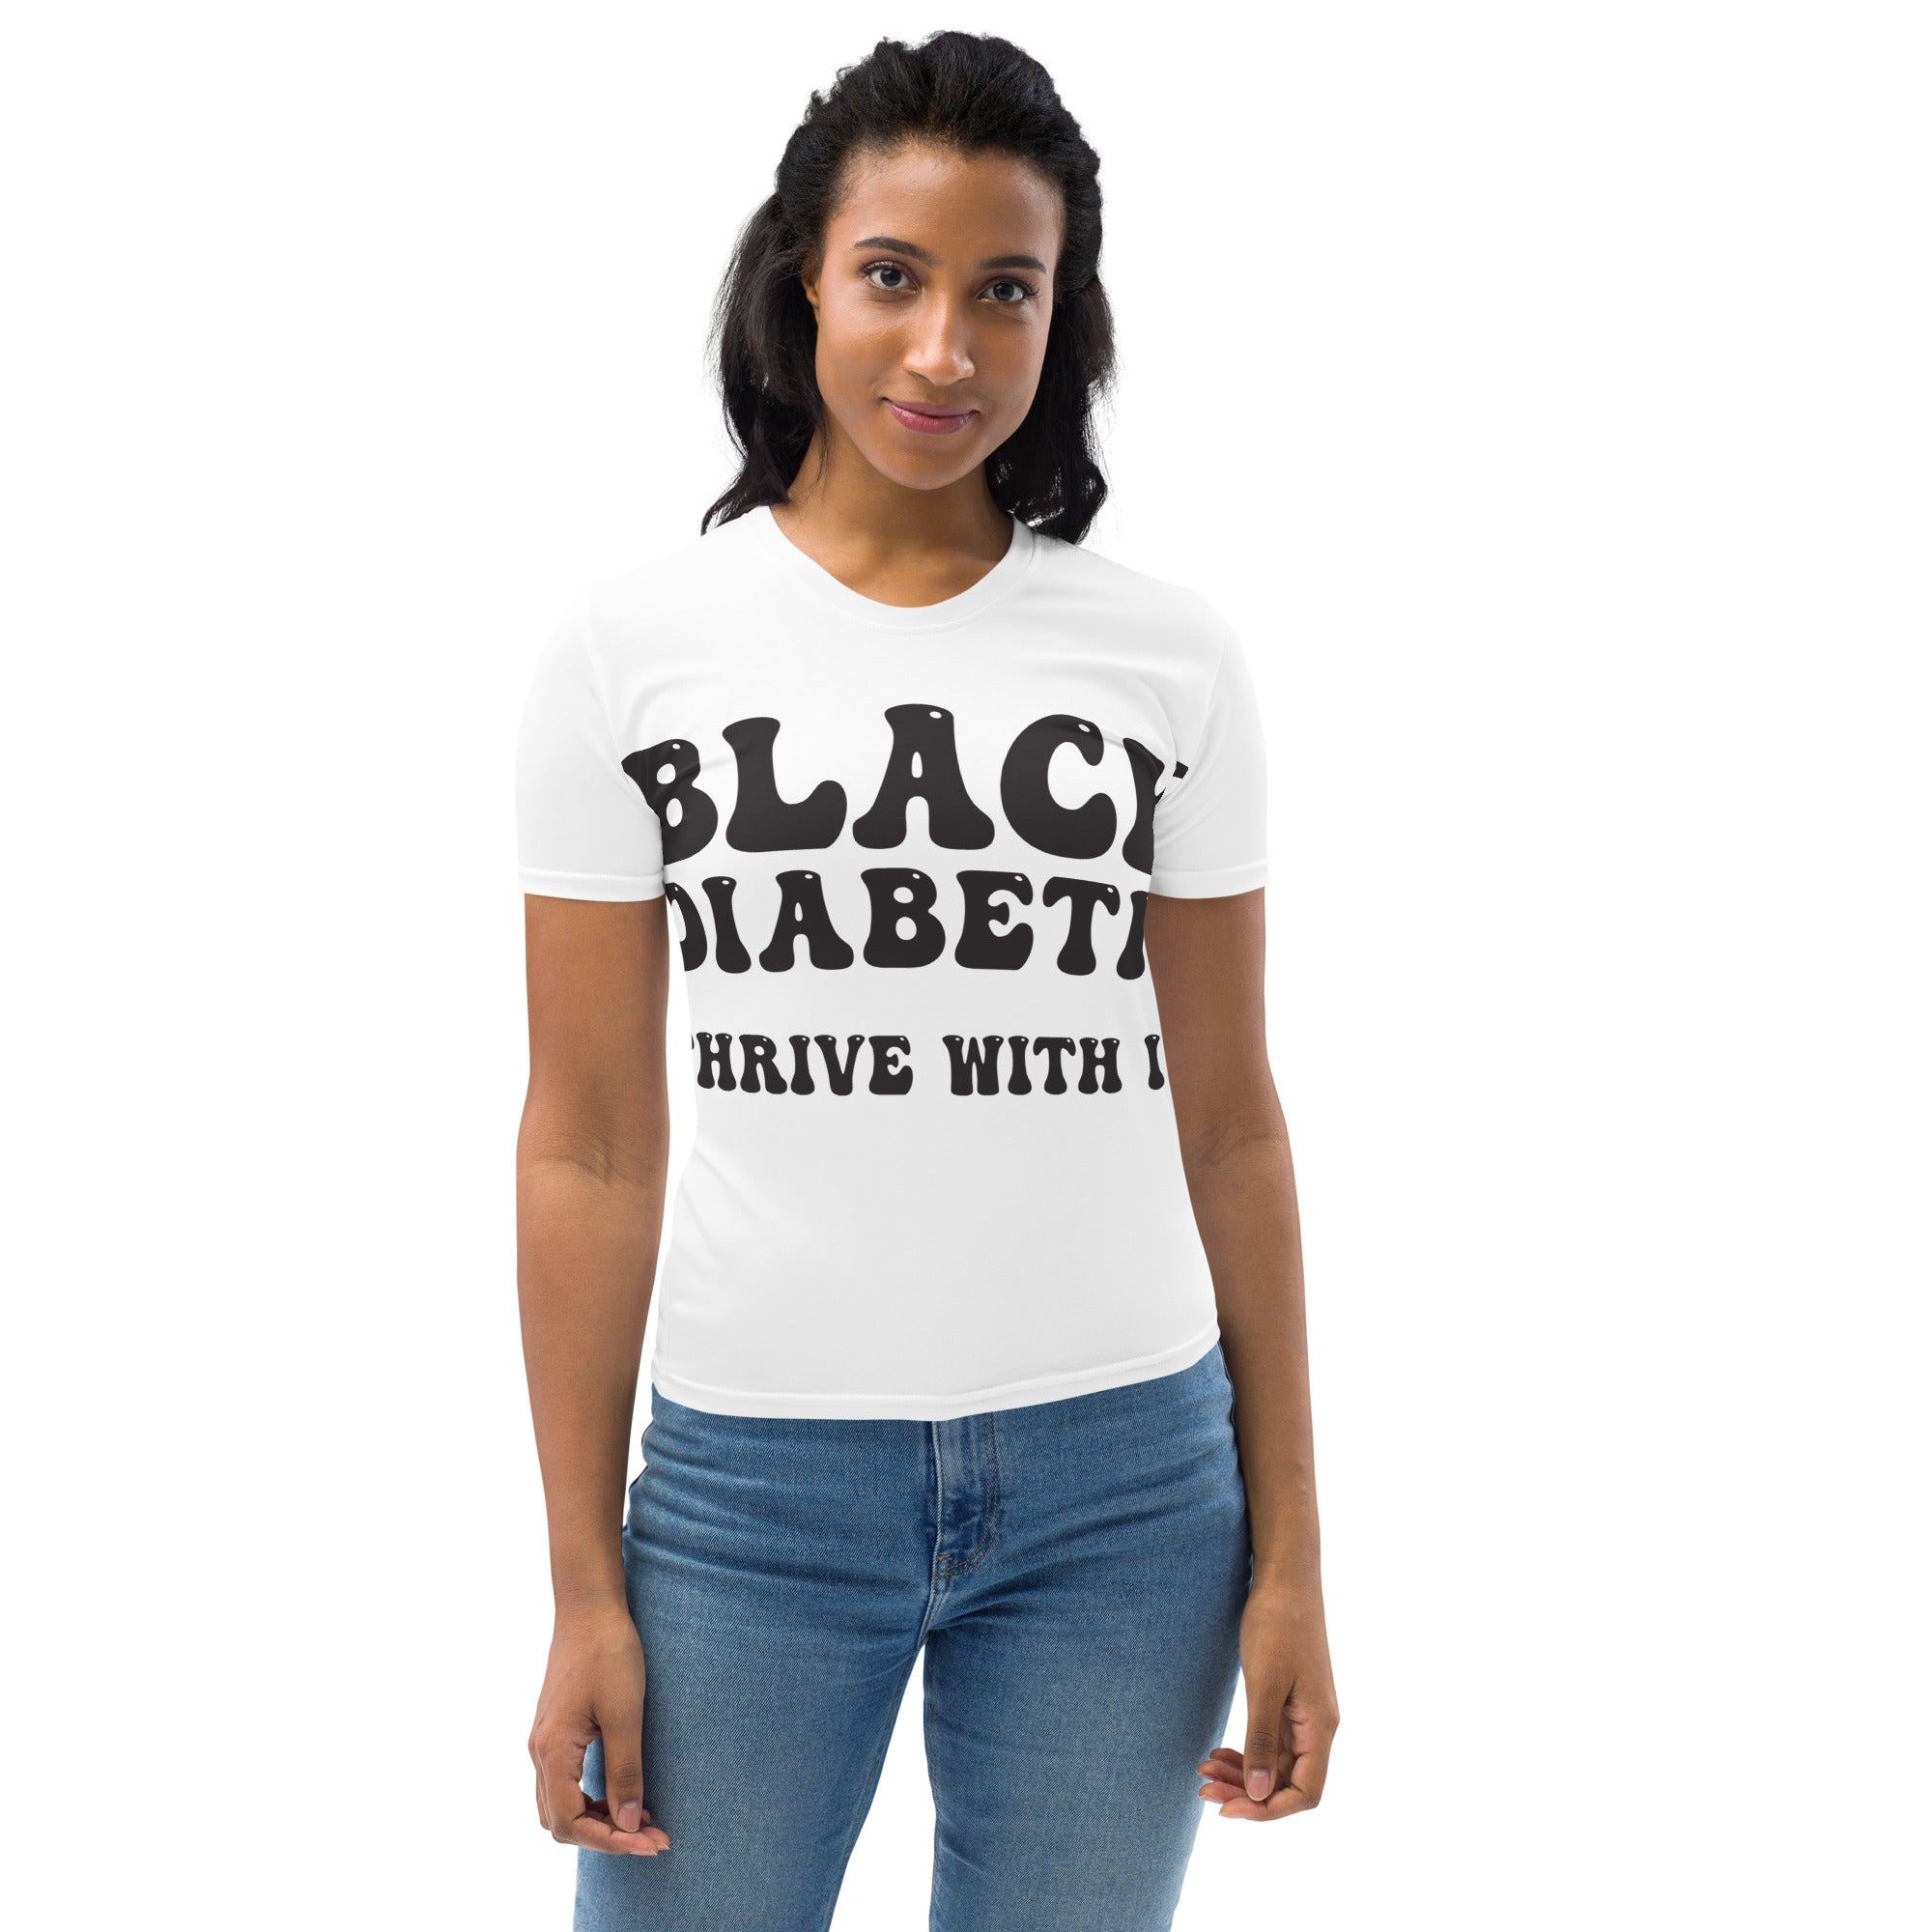 Black Diabetic Women's Fit Shirt